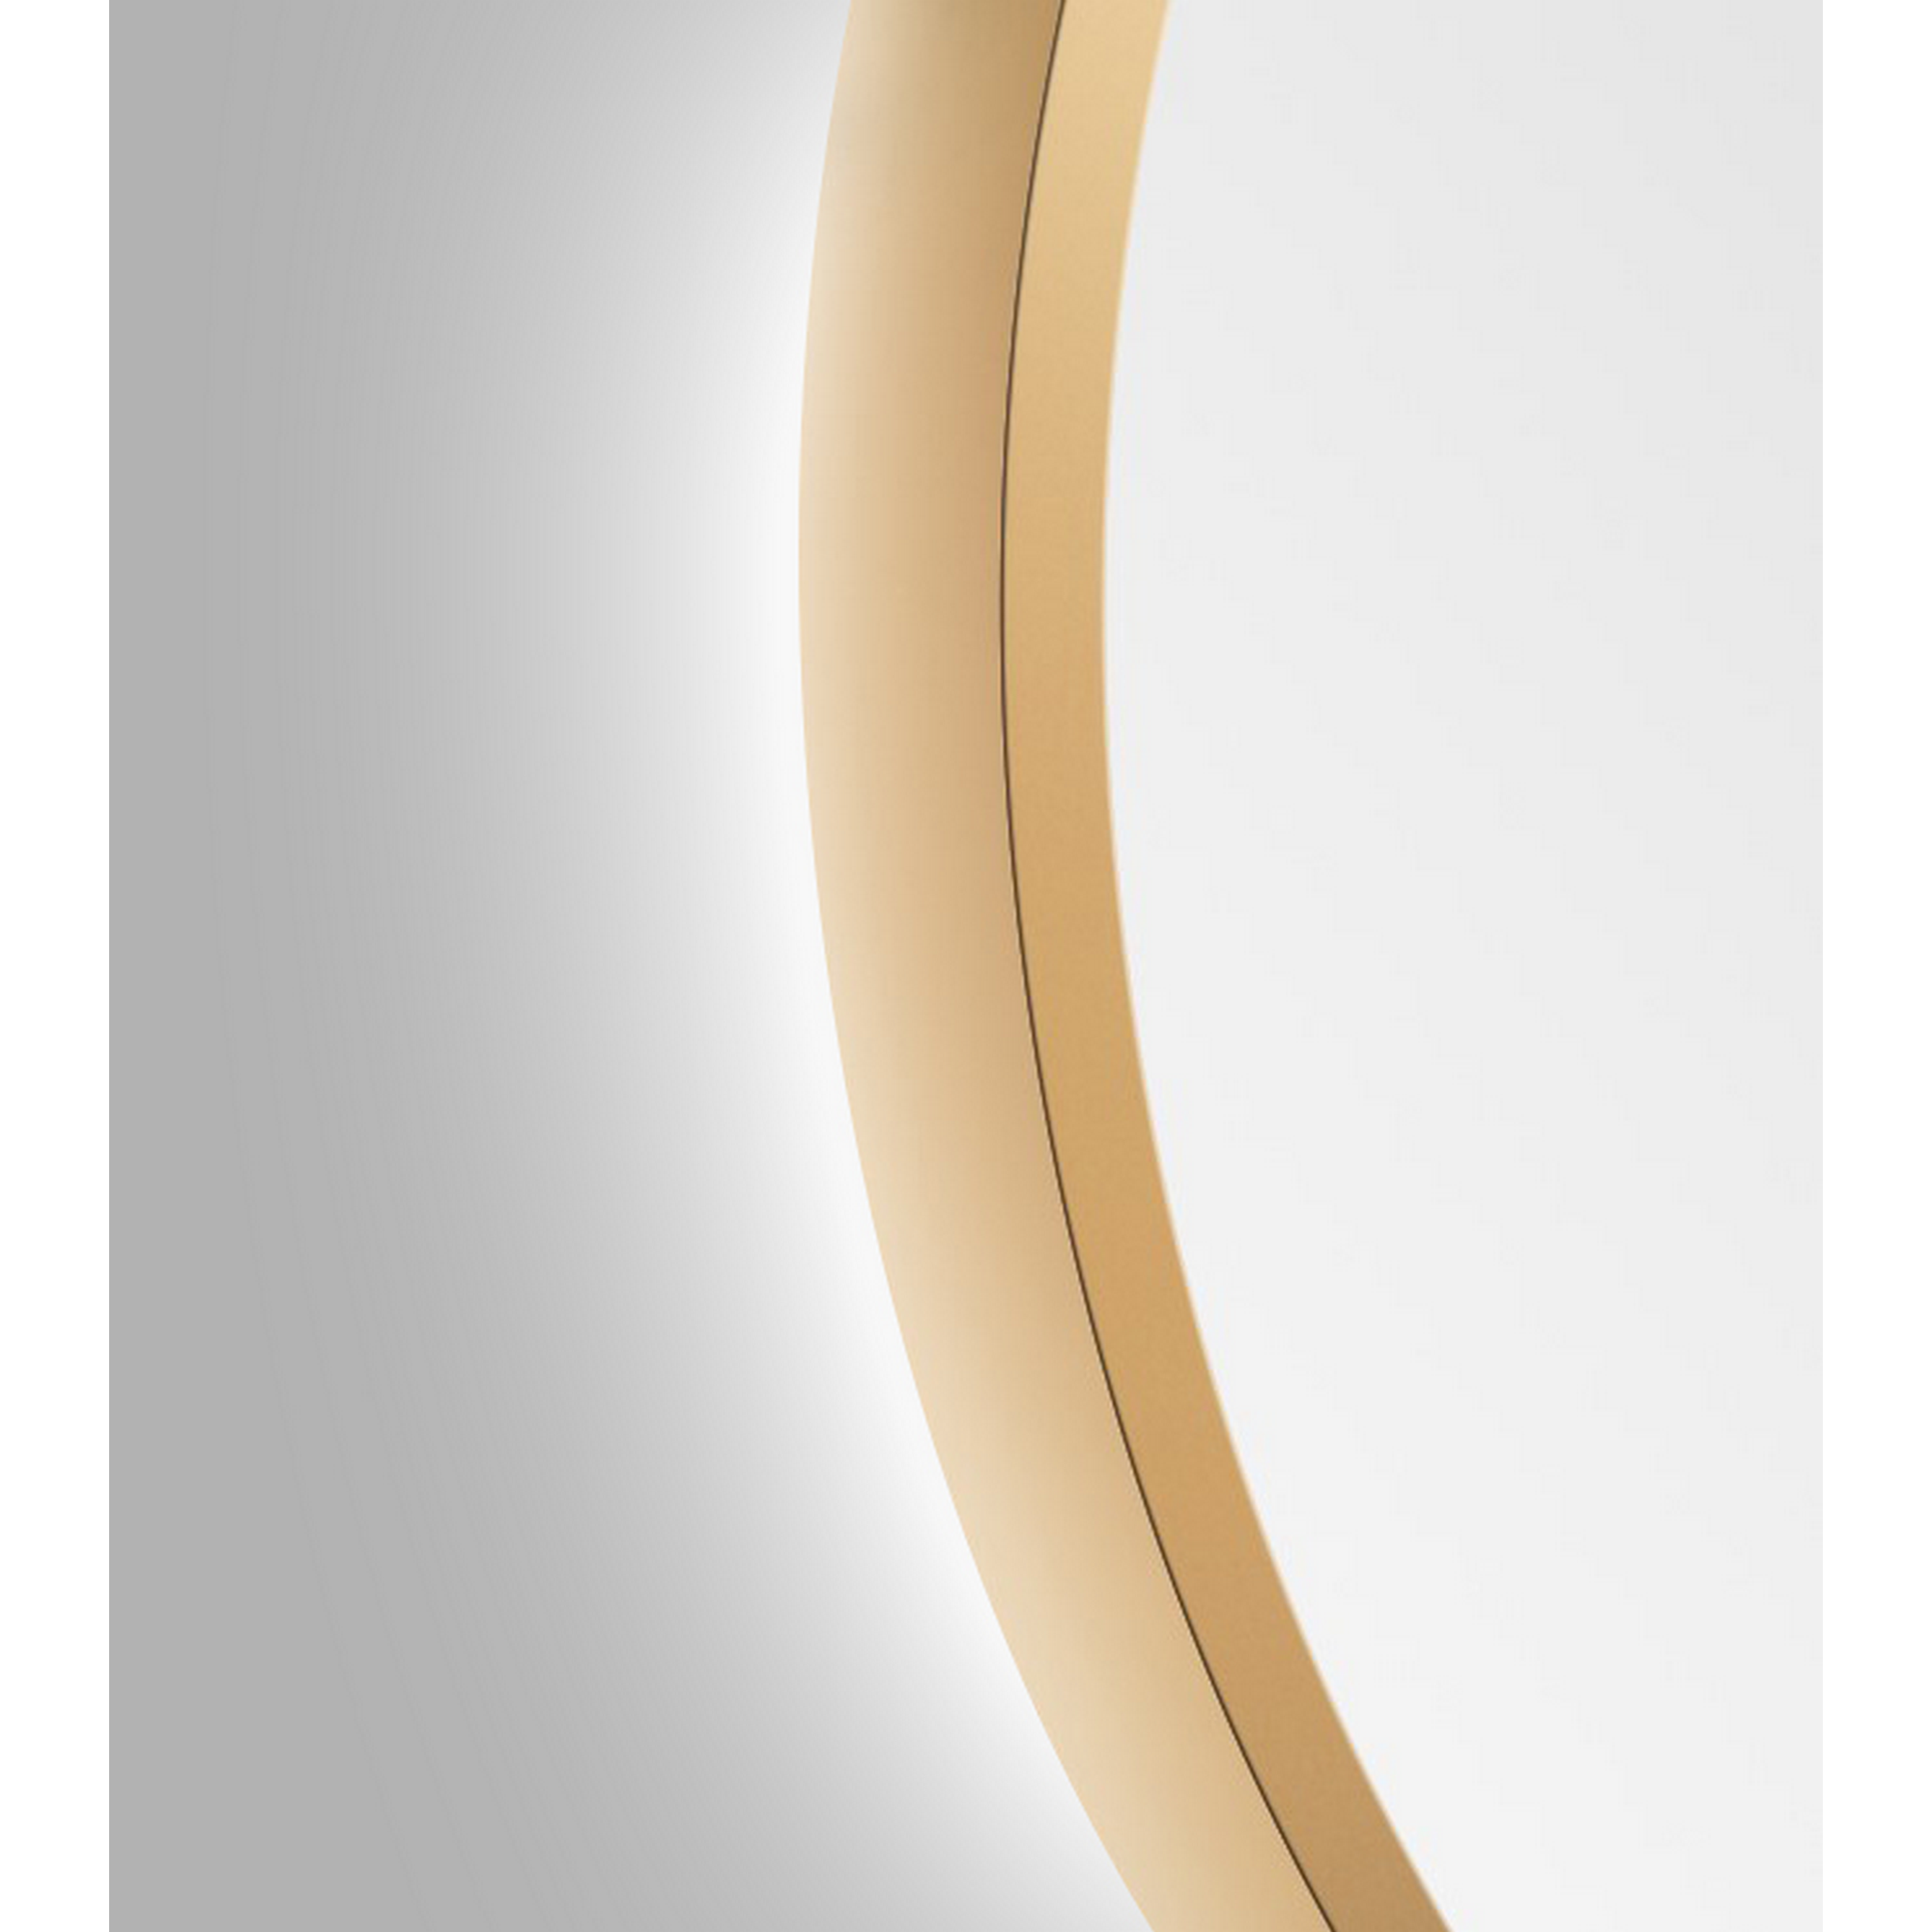 LED-Spiegel 'Silver Barbier' gold Ø 80 cm + product picture